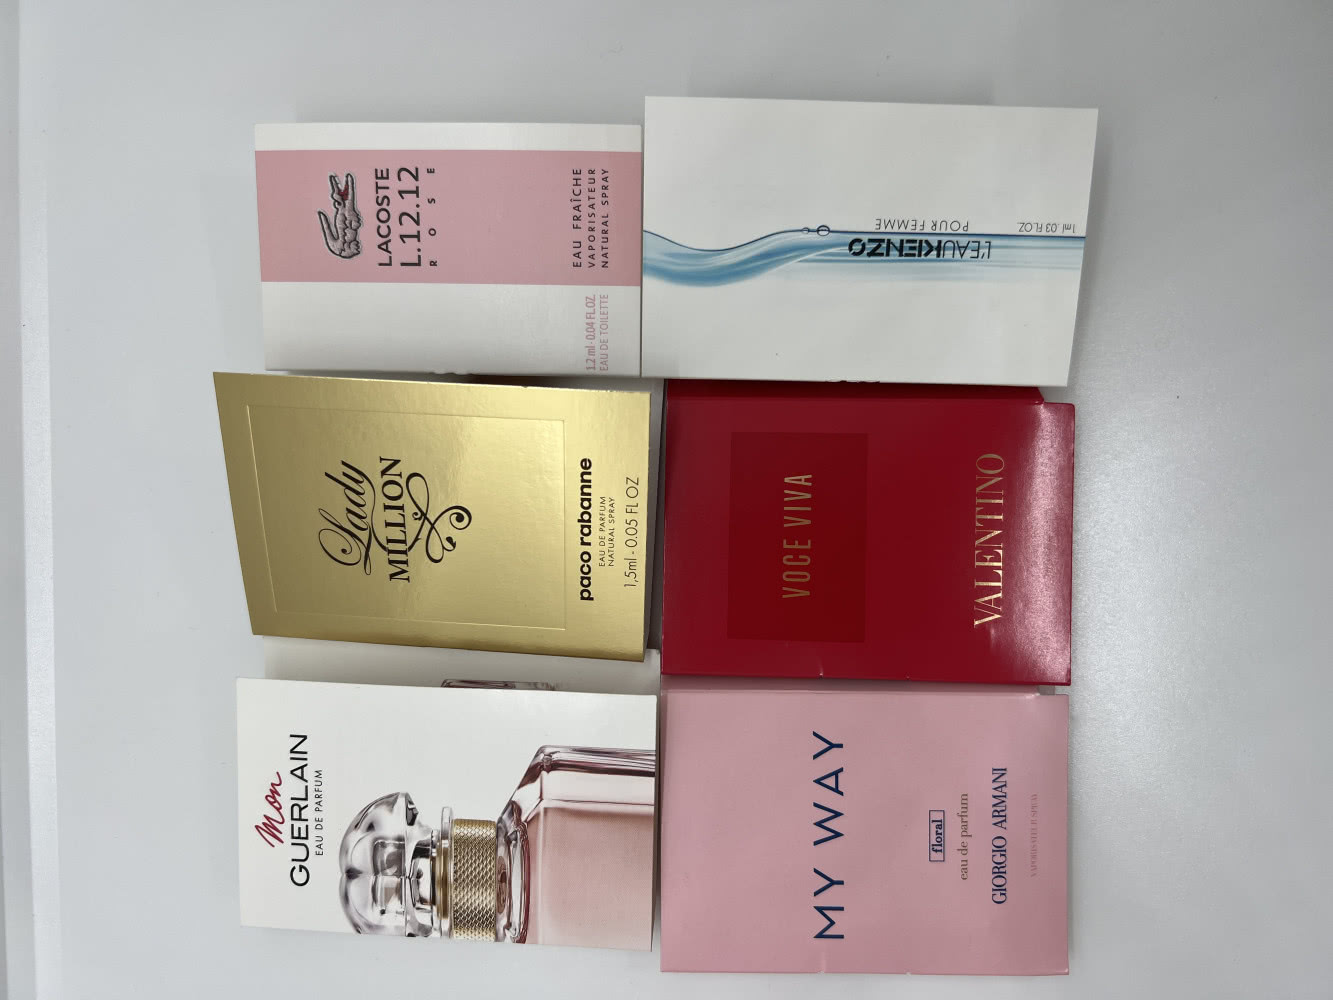 Пробники парфюма Voce Viva, Irresistible, Lacoste, Givenchy